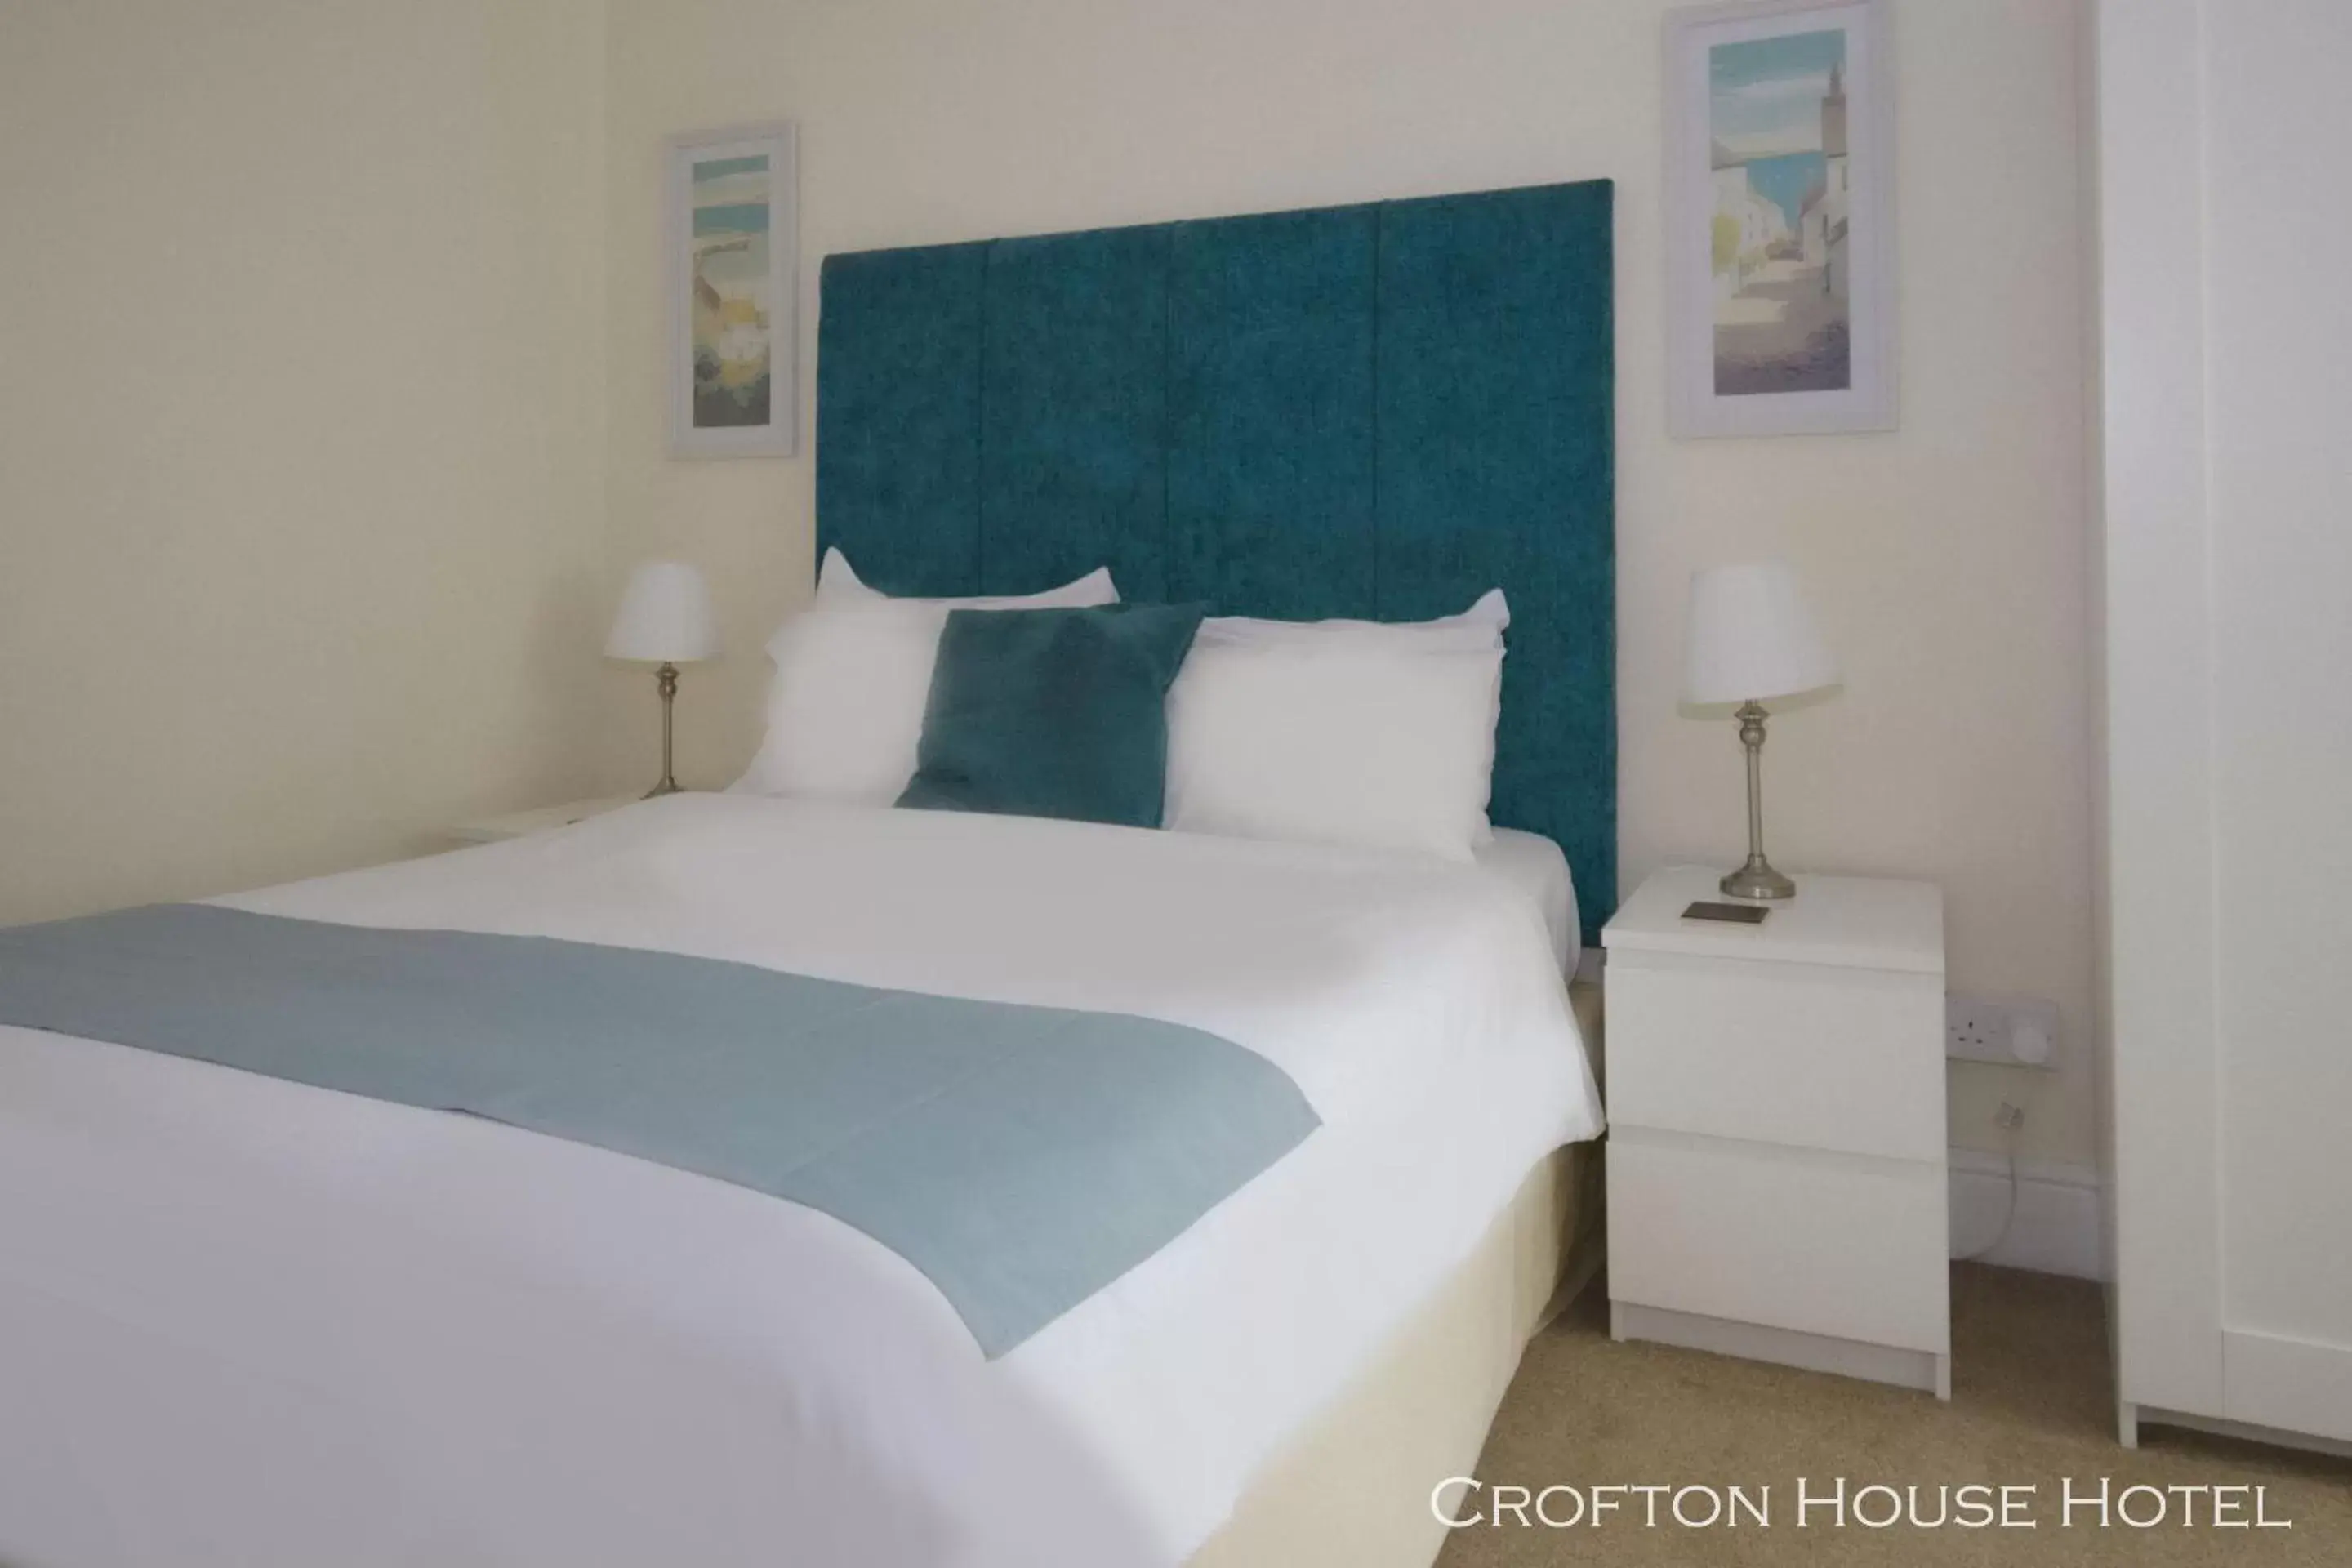 One-Bedroom Suite in Crofton House Hotel